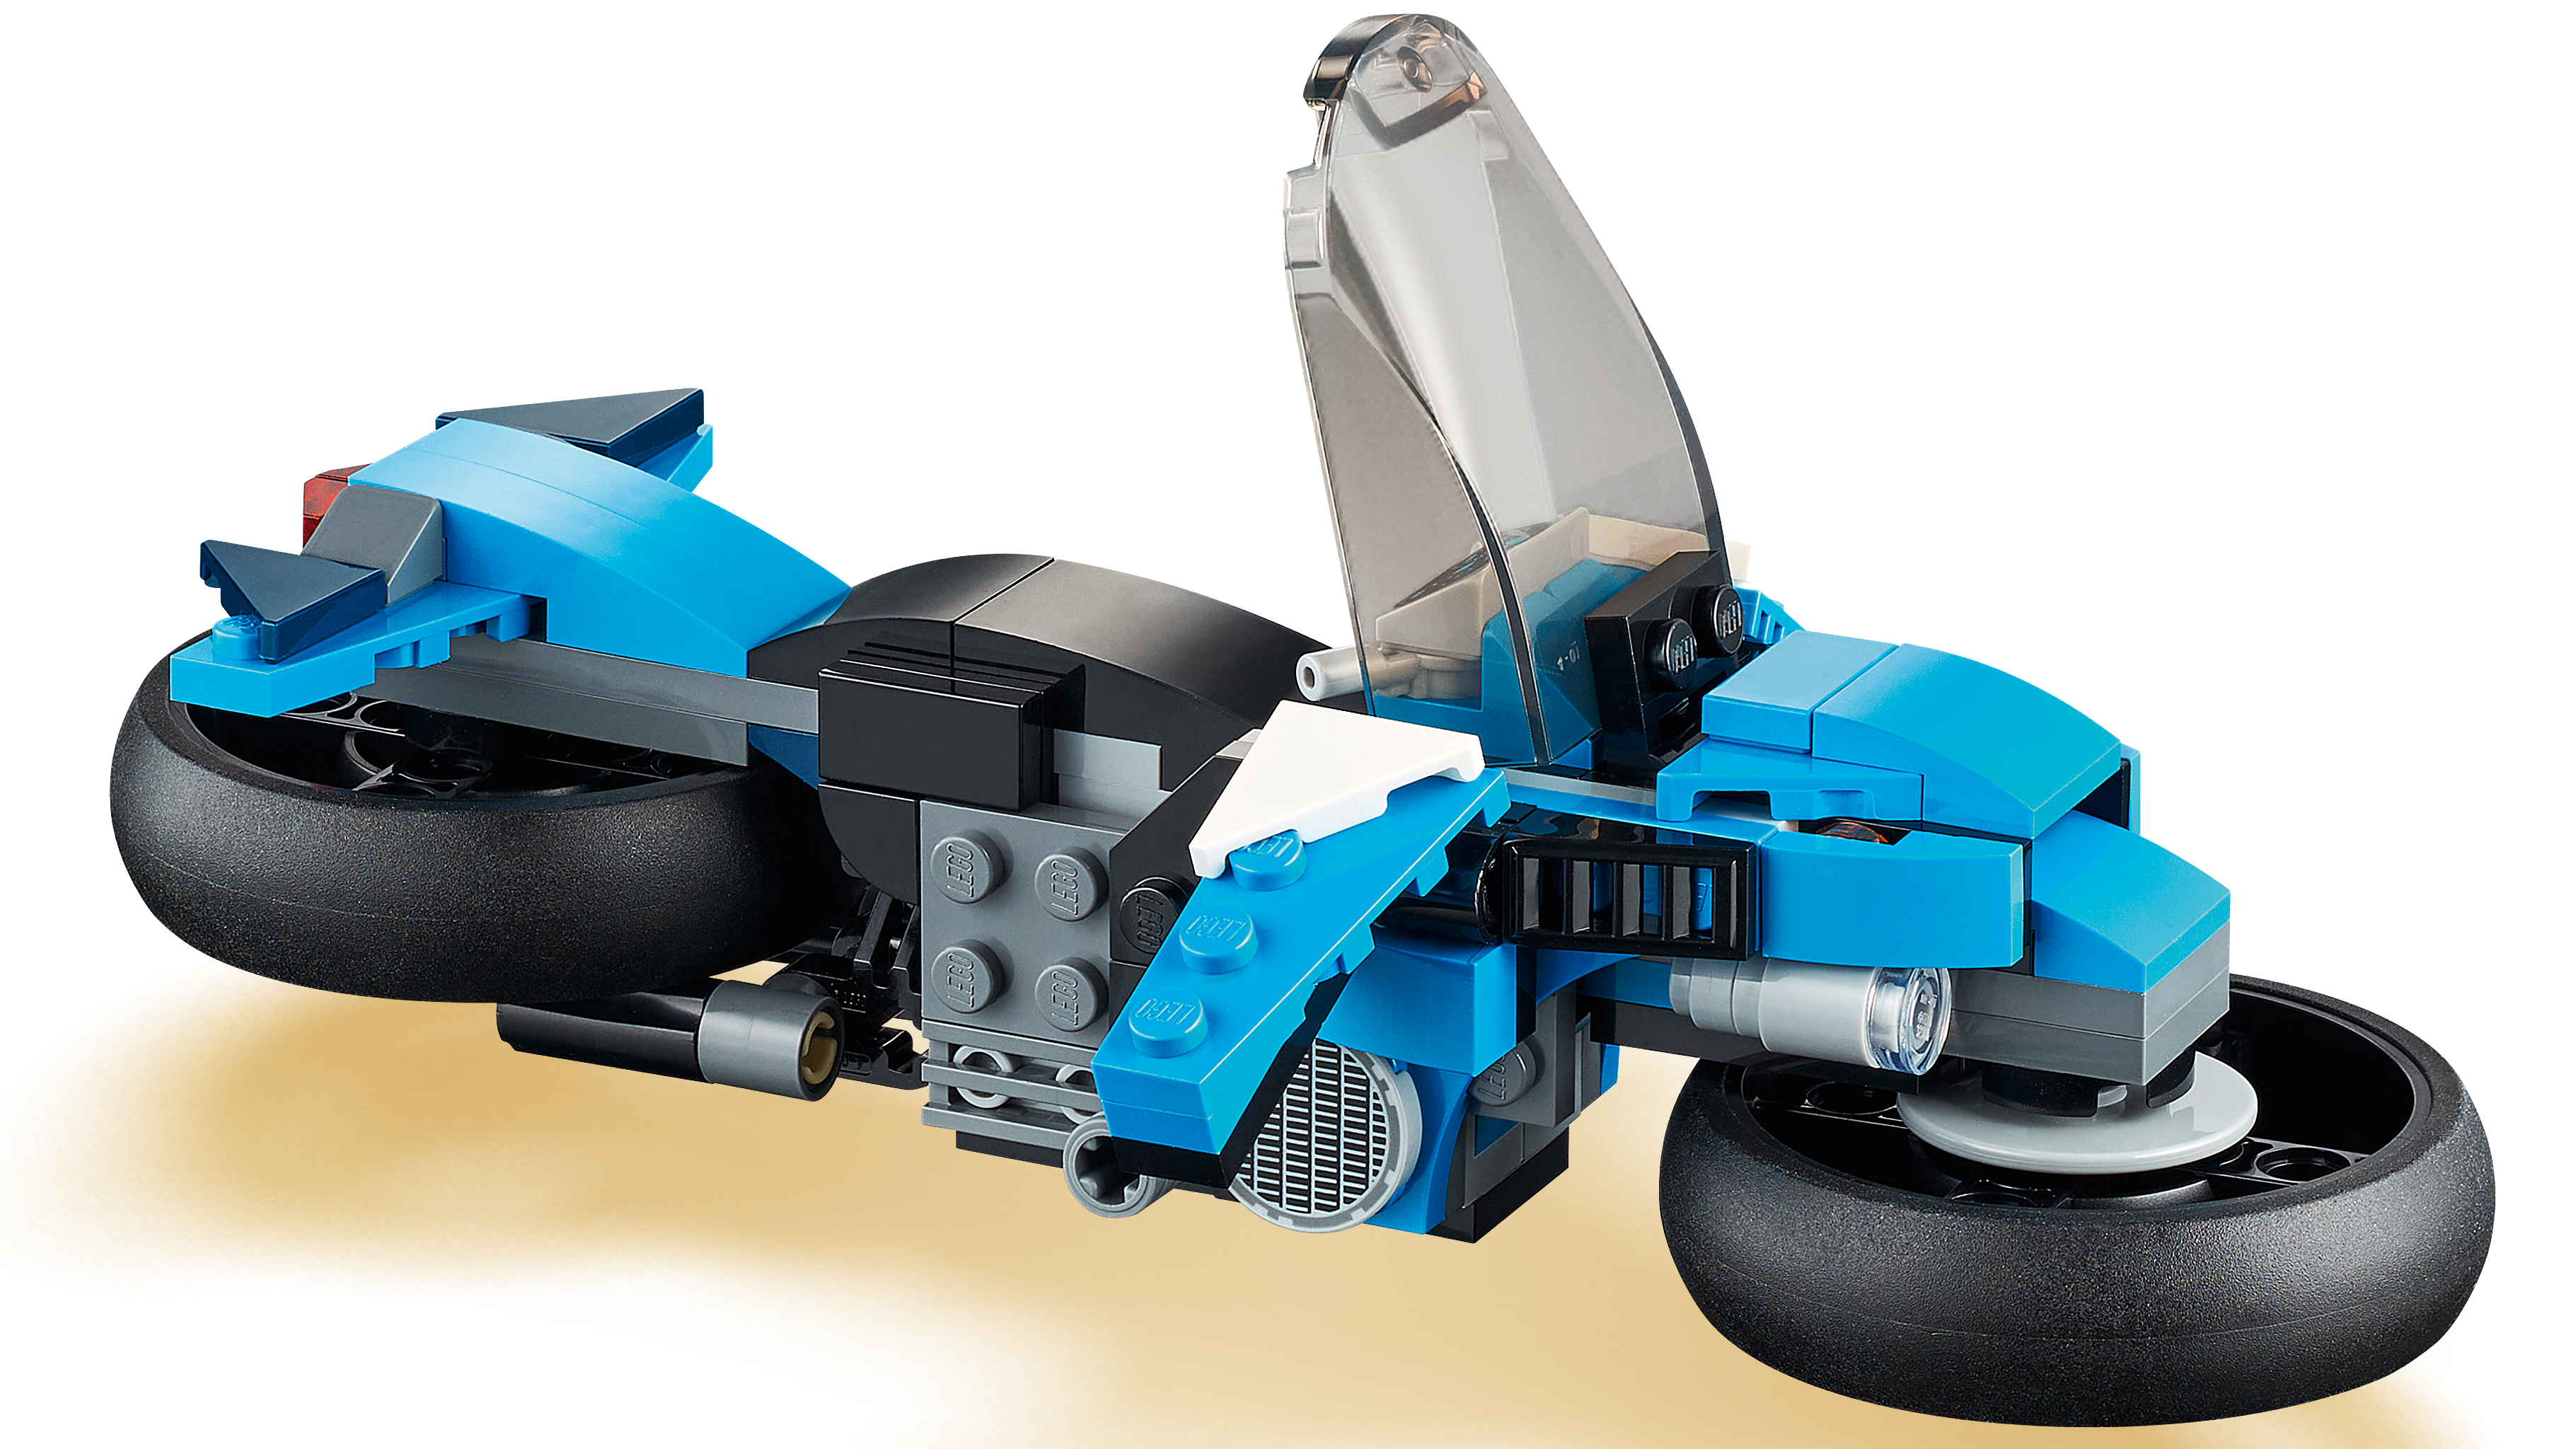 LEGO Creator 31114 Superbike 